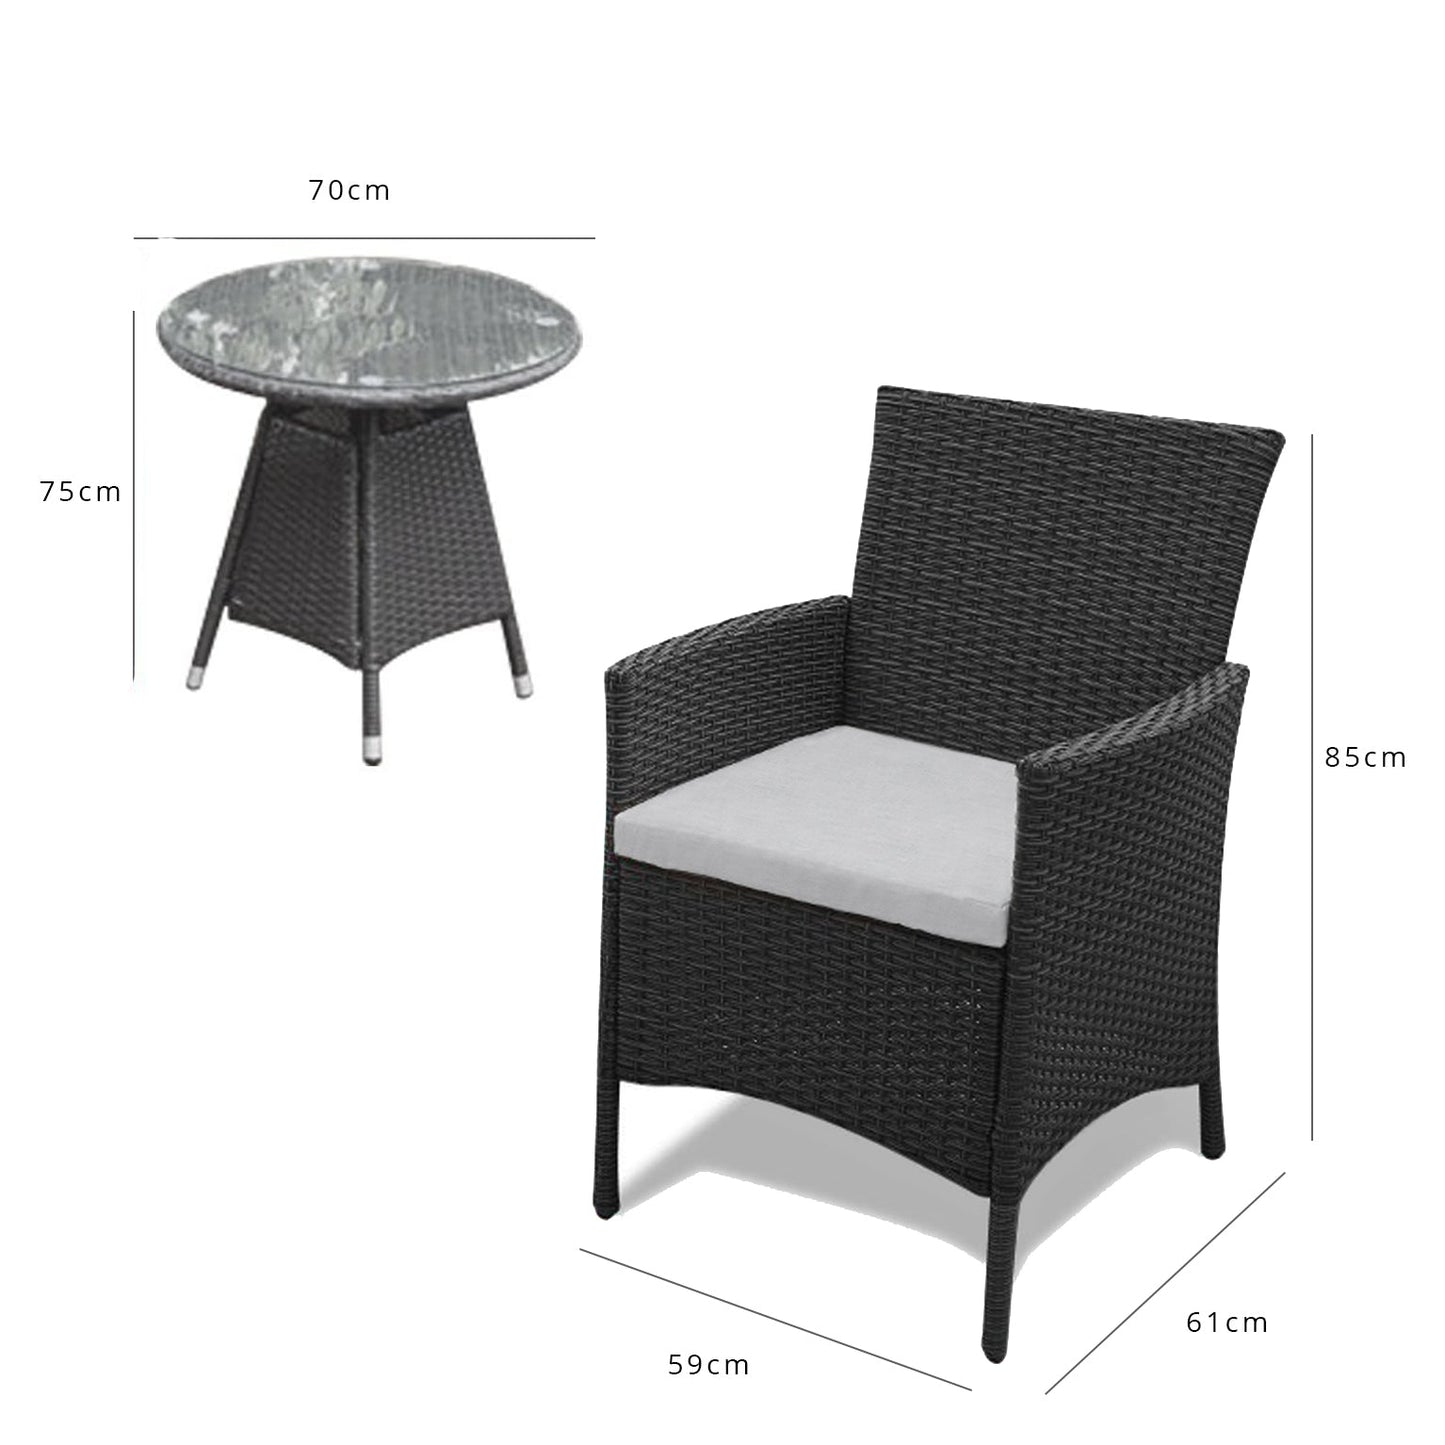 Kemble 2 Seater Rattan Bistro Dining Set in Black - Garden Furniture